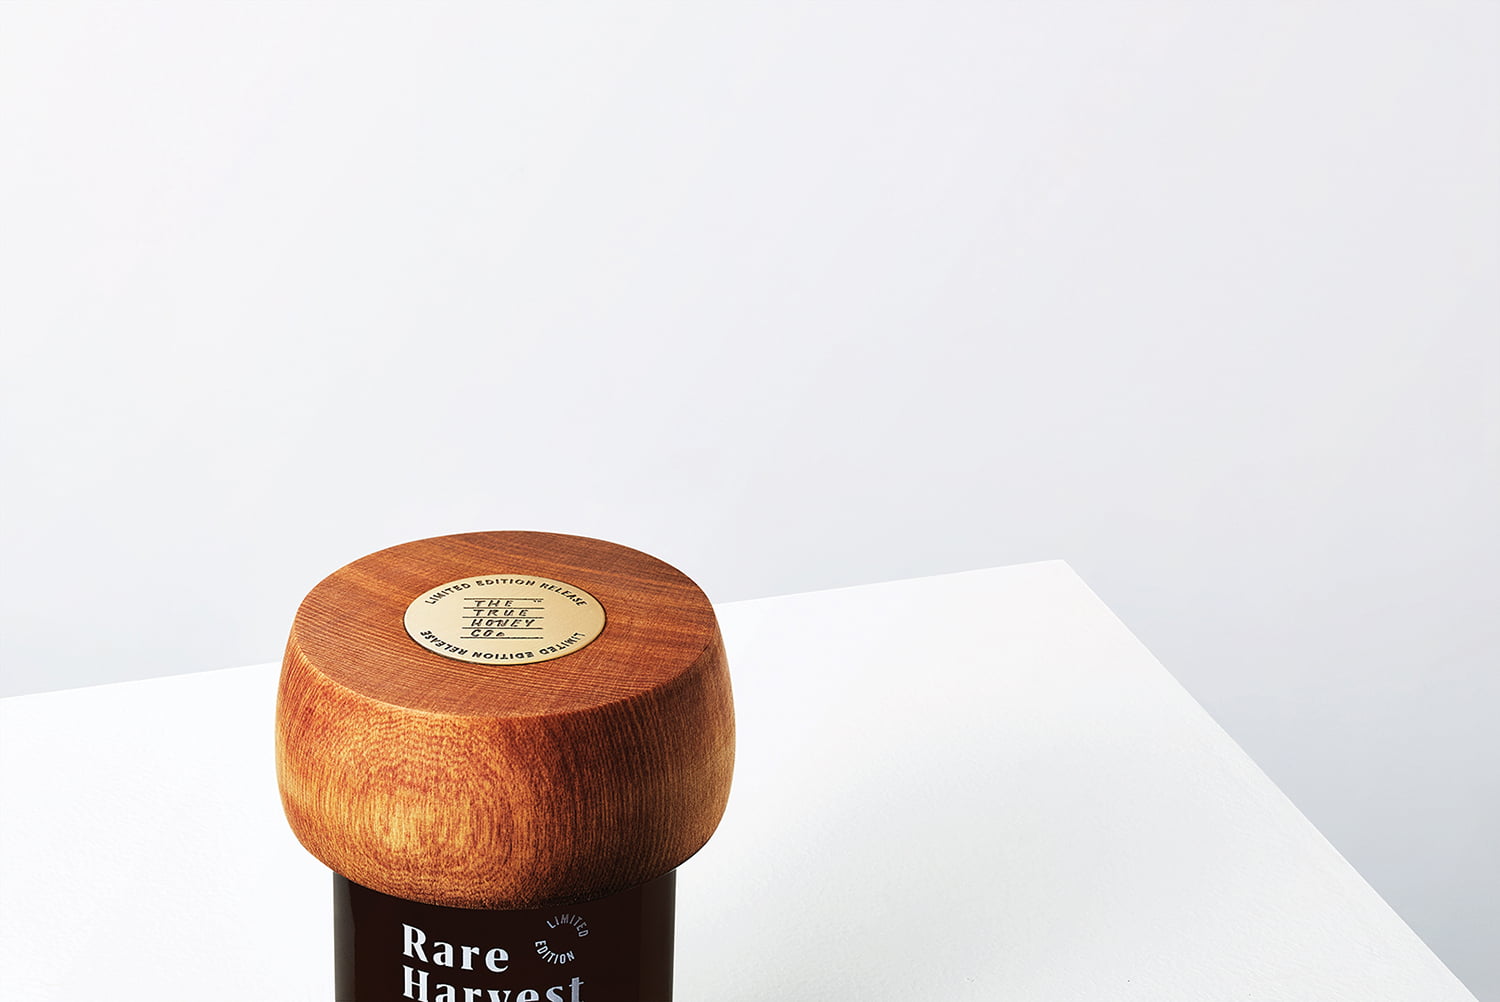 12 rare harvest the true honey company packaging design marx design new zealand bpo